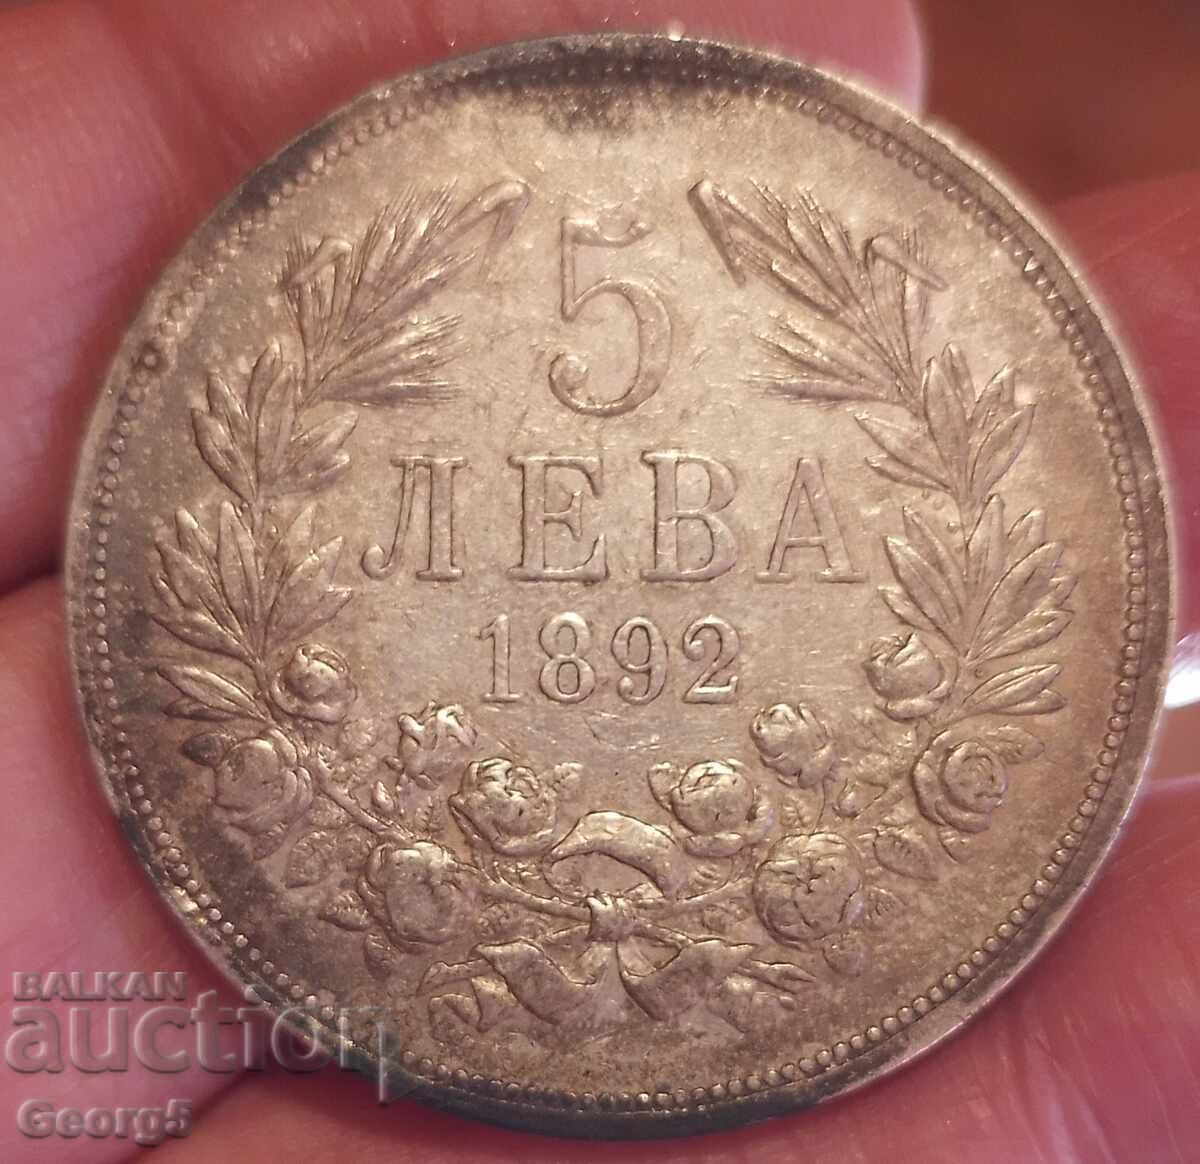 5 BGN 1892